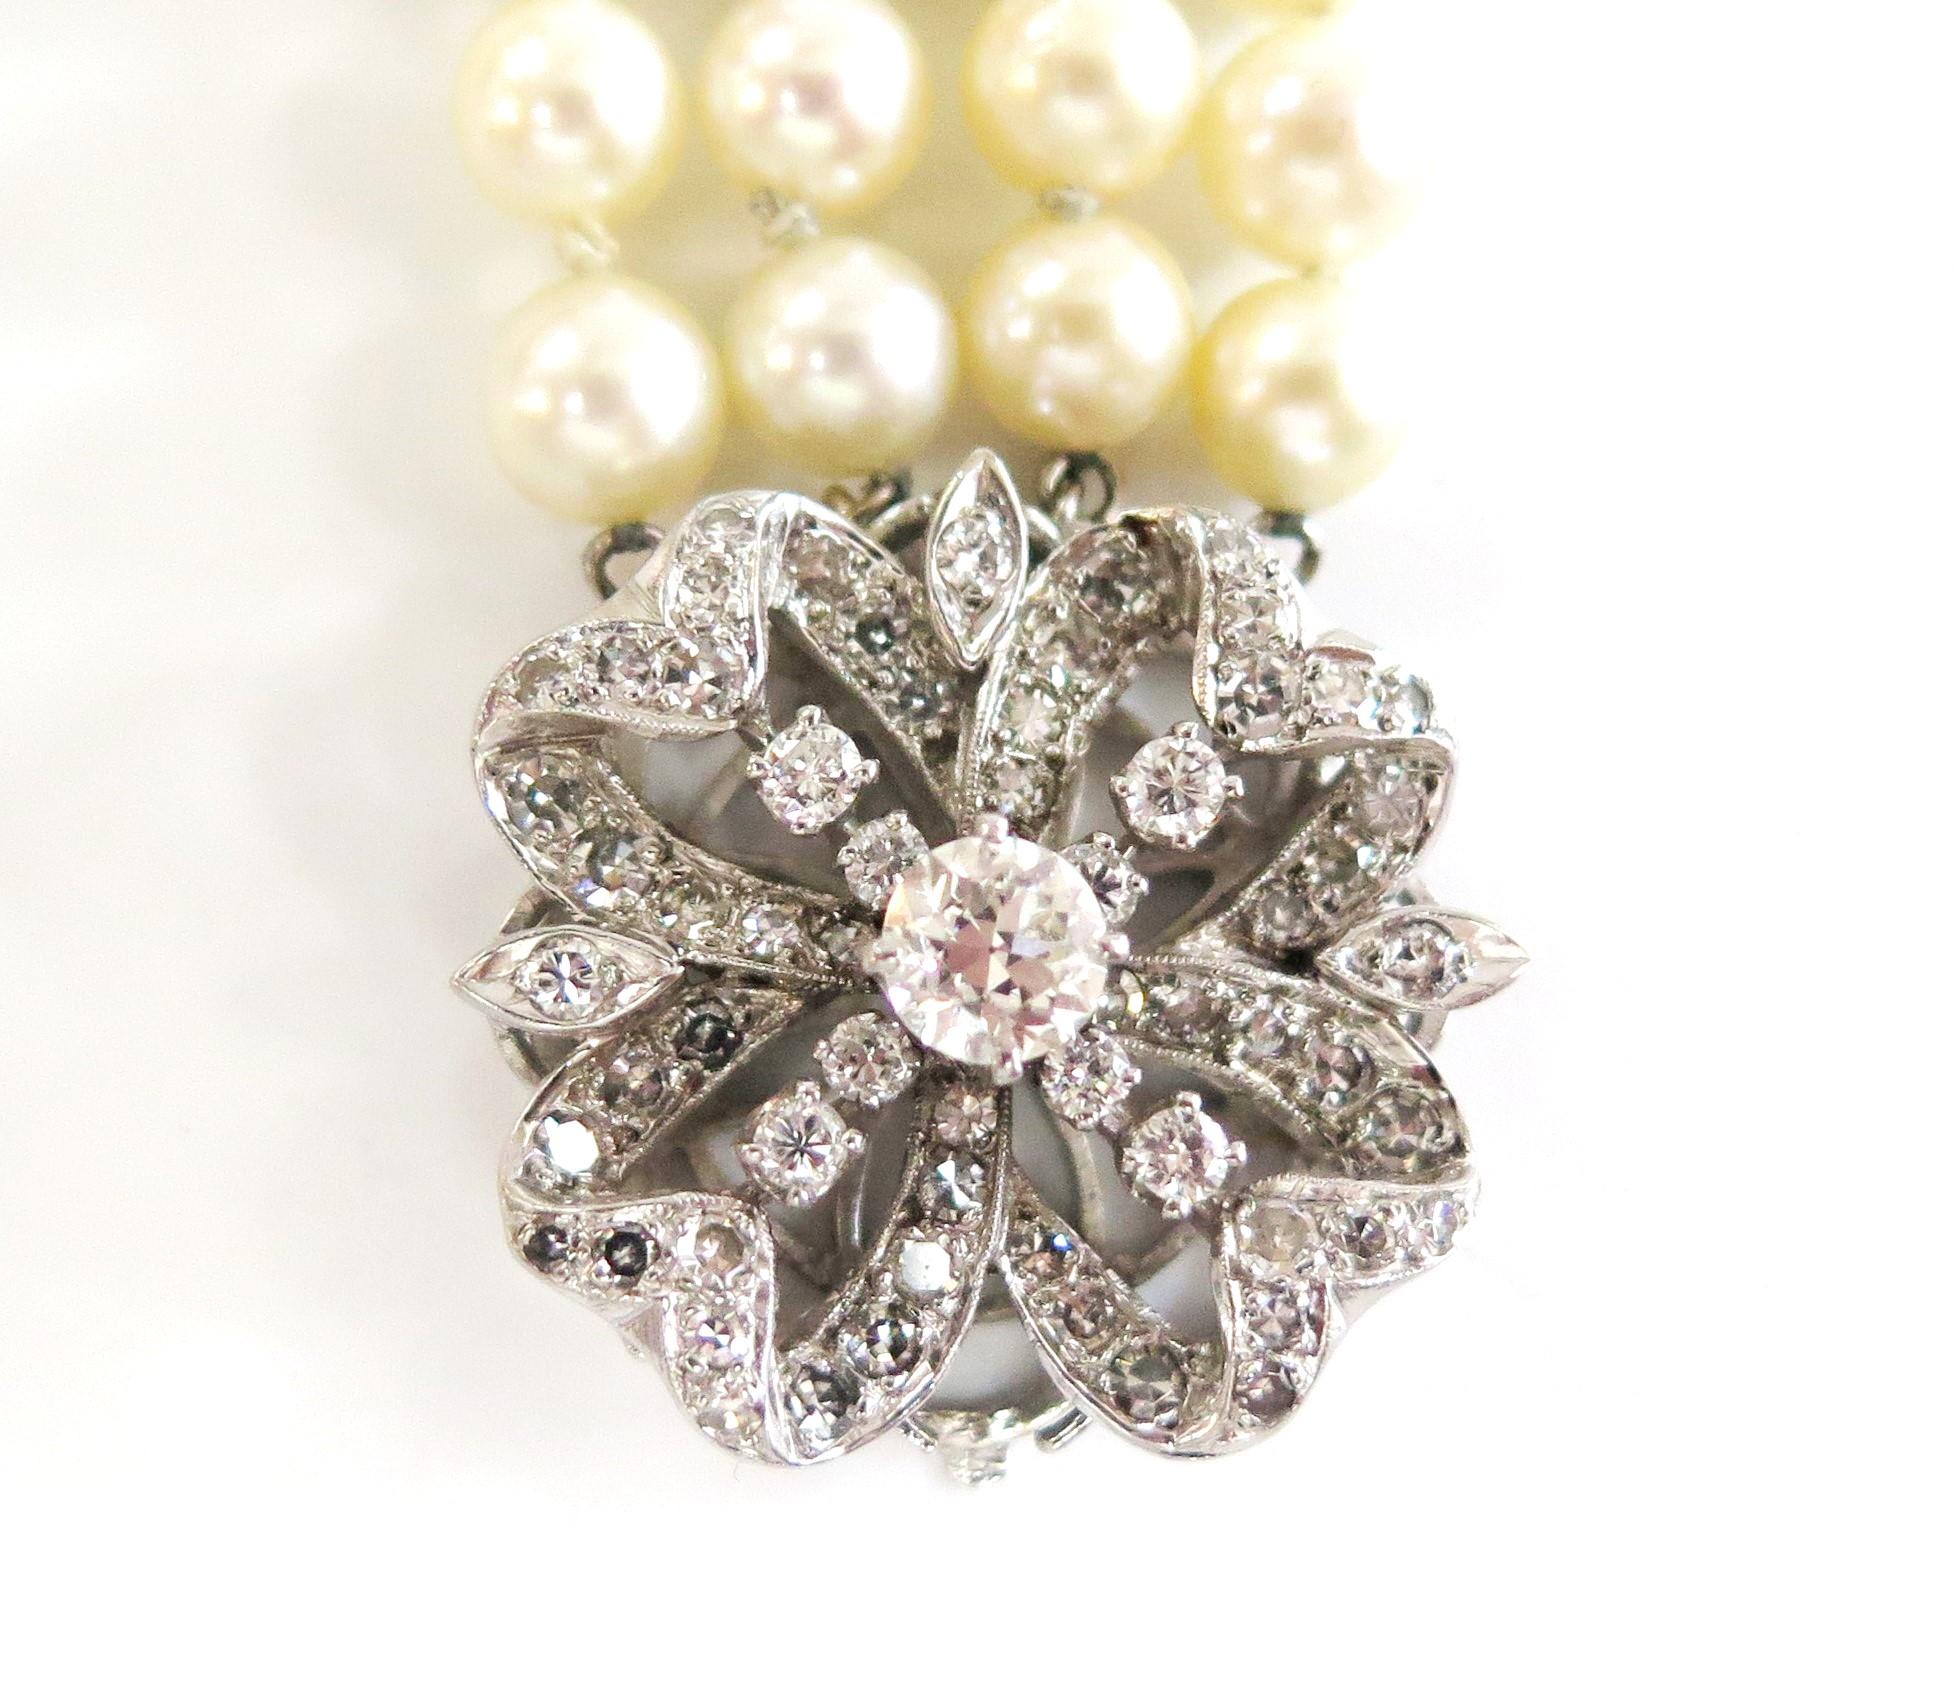 Four Strand Cultured Pearl Bracelet w Diamond Clasp - 2.50 Carats total / 14k 2